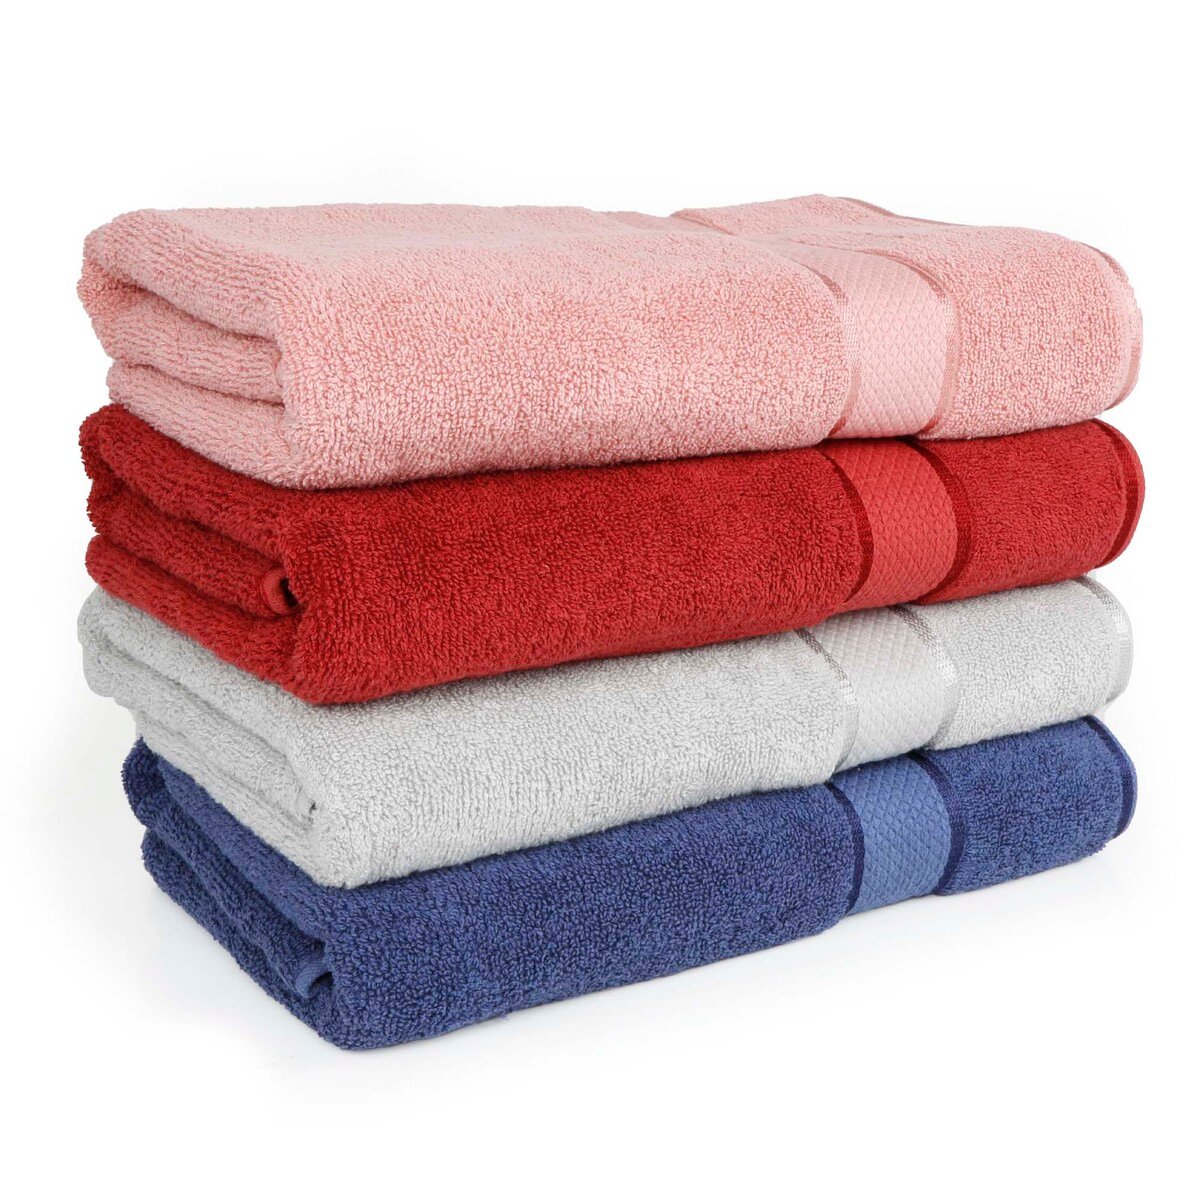 Barbarella Cotton Bath Towel 70x140cm Assorted Per pc Online at Best Price, Towels & Robes